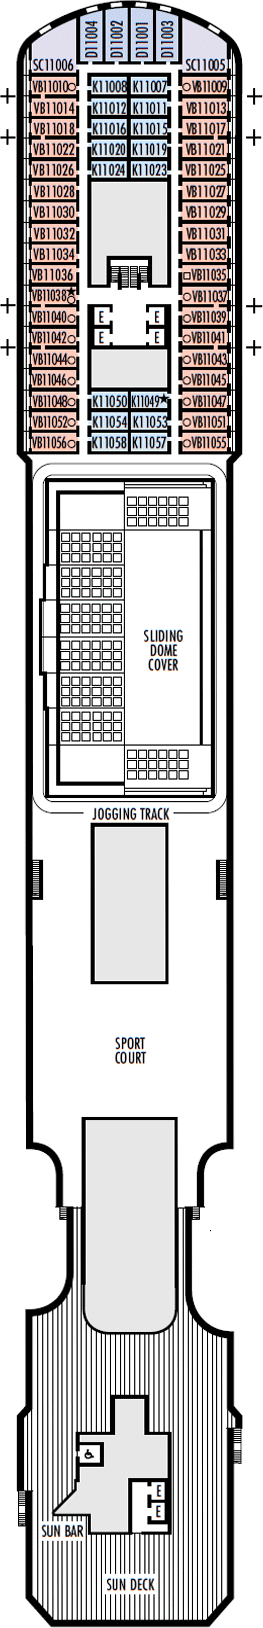 Koningsdam Sun Deck Deck Plan